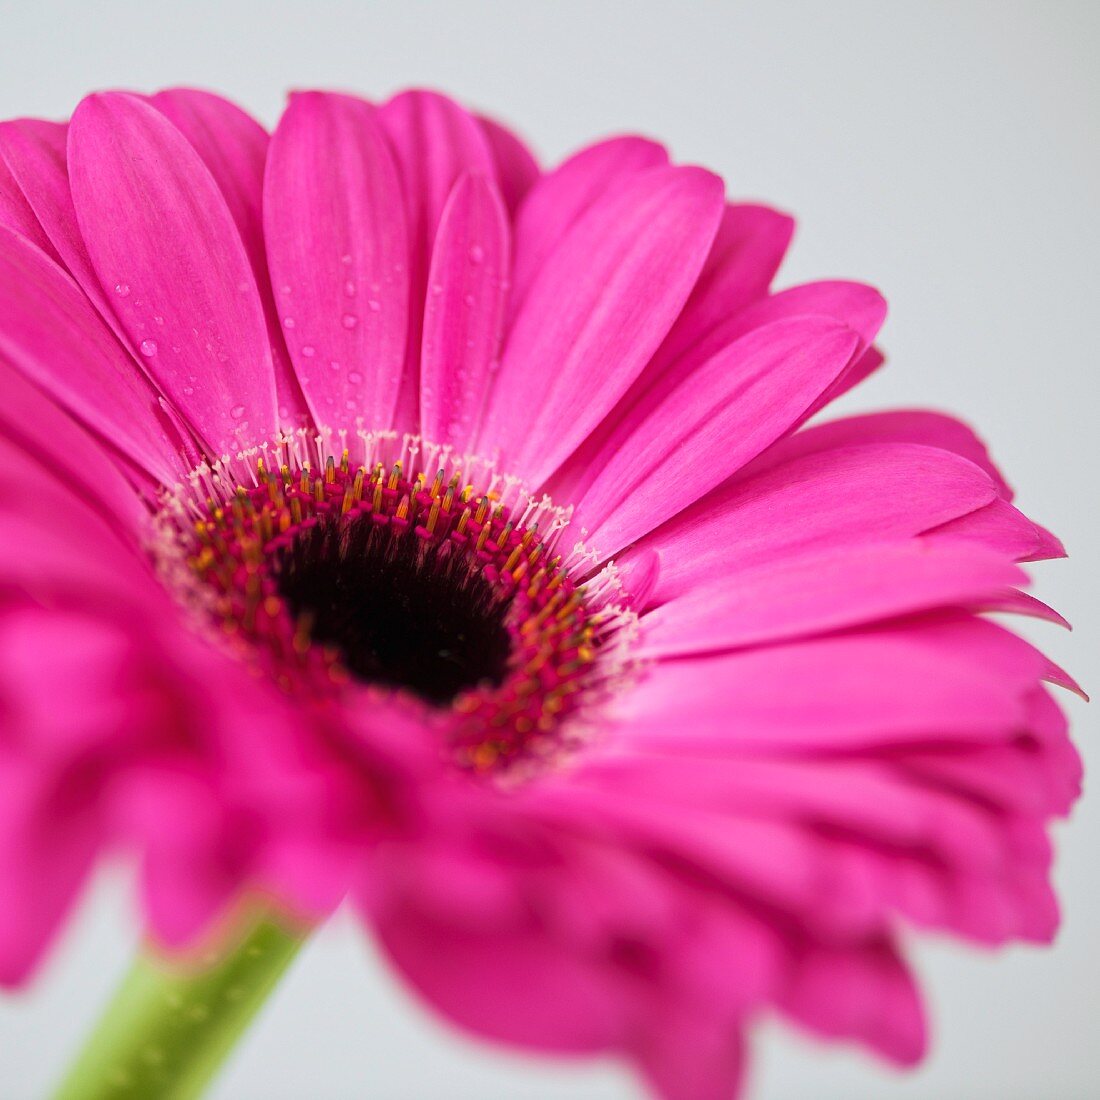 Studio close-up of gerbera daisy